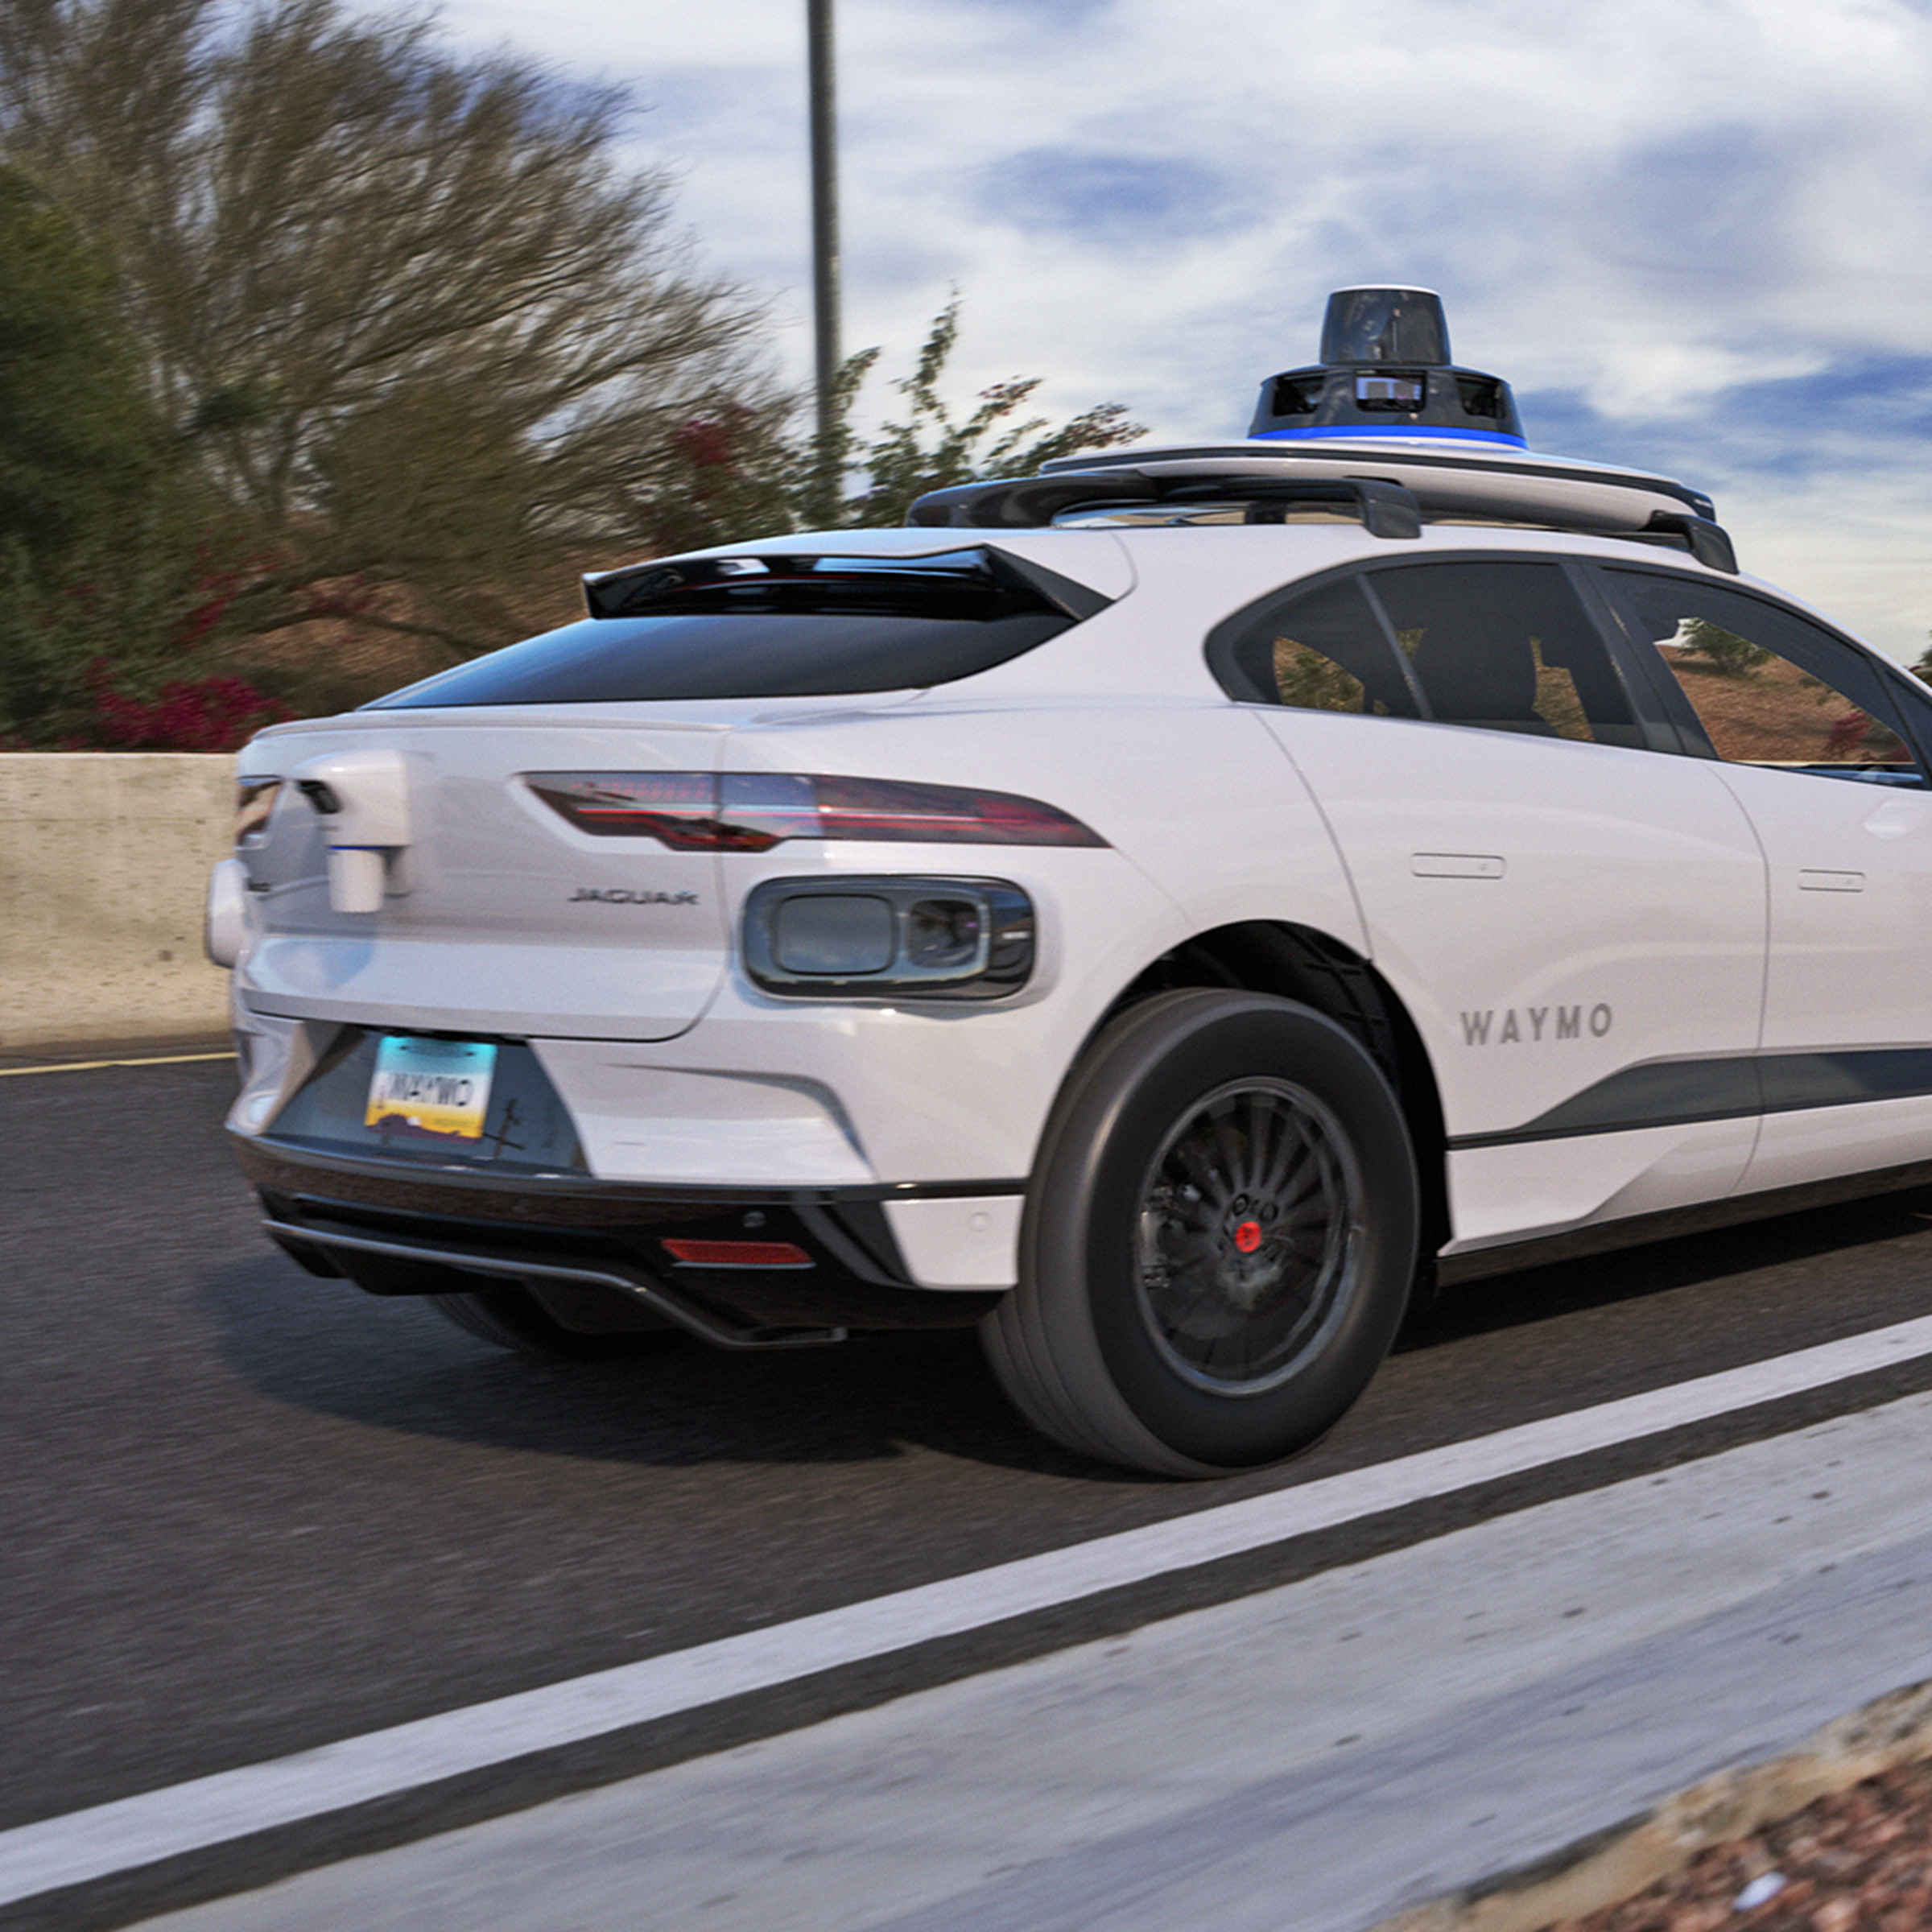 Waymo driverless vehicle on a highway